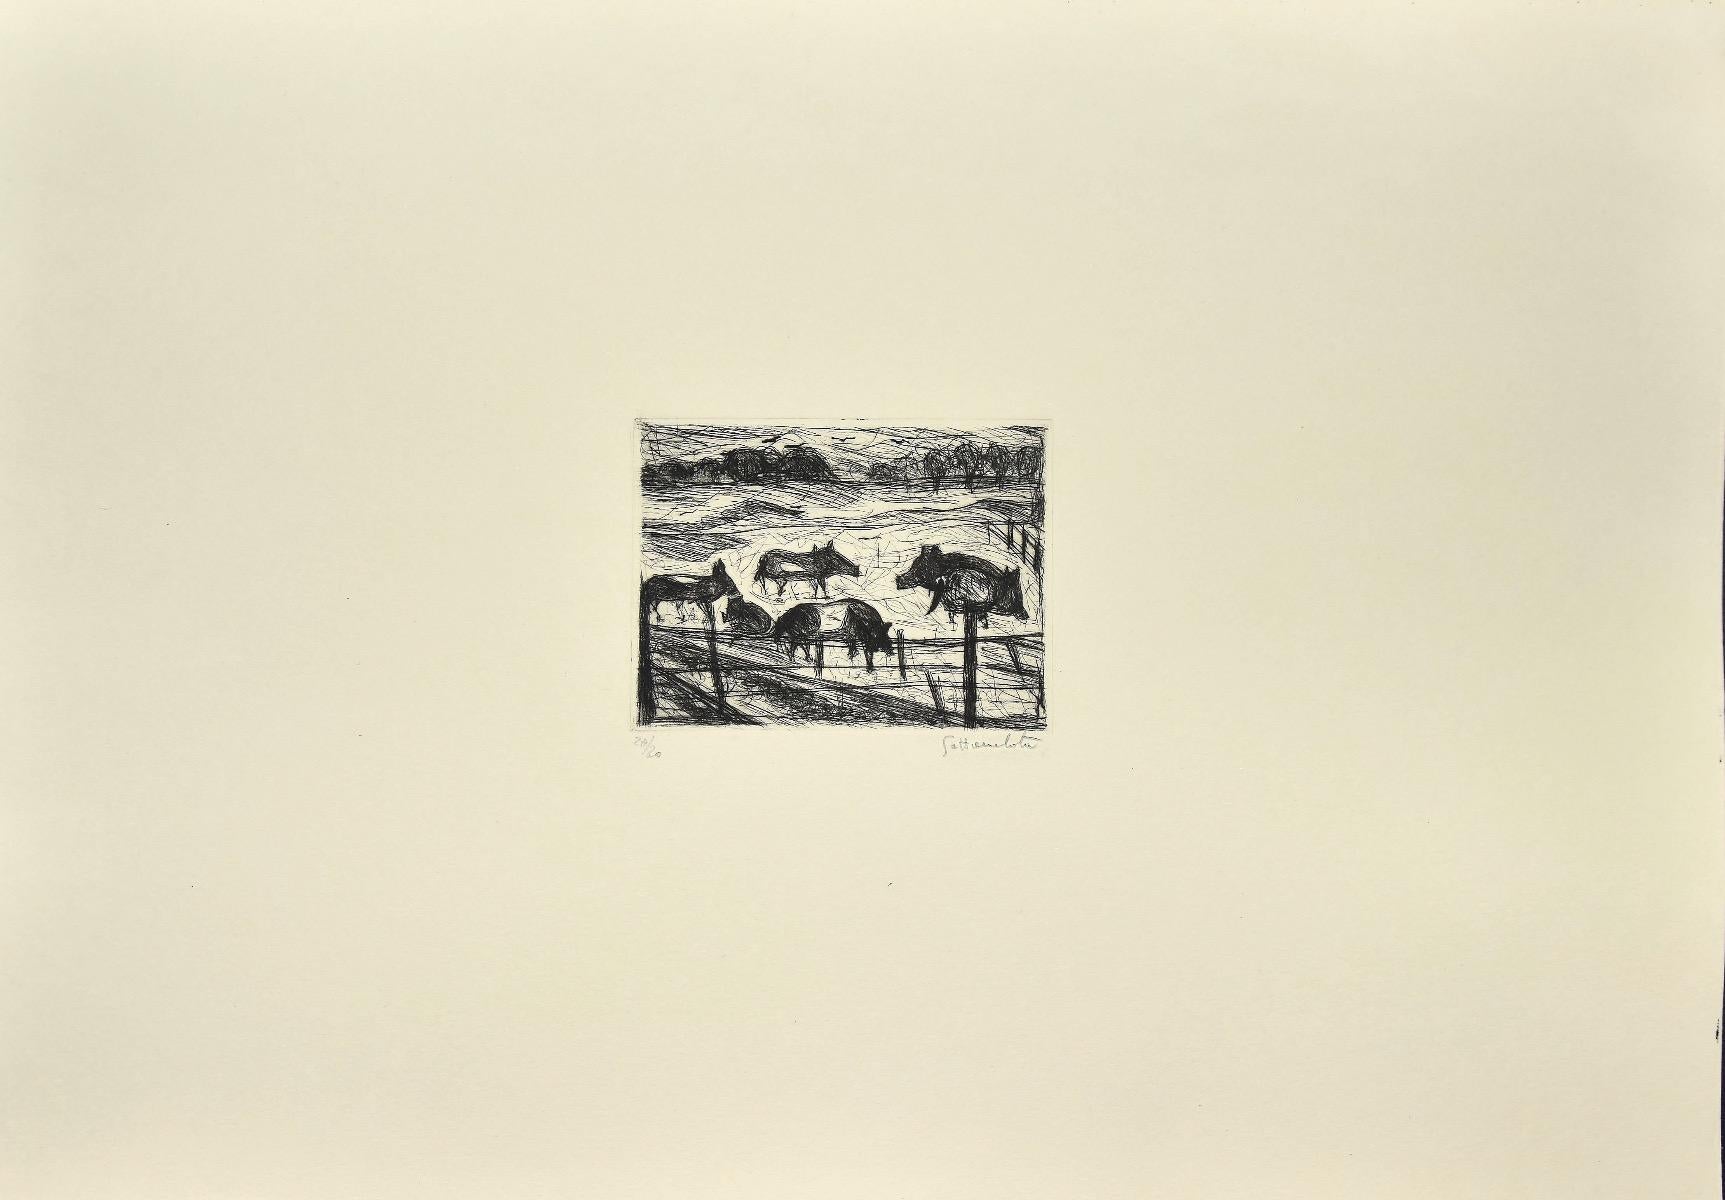 Nazareno Gattamenata Figurative Print - Animals in the corral - Original Etching on Paper by Nazareno Gattamelata - 1985